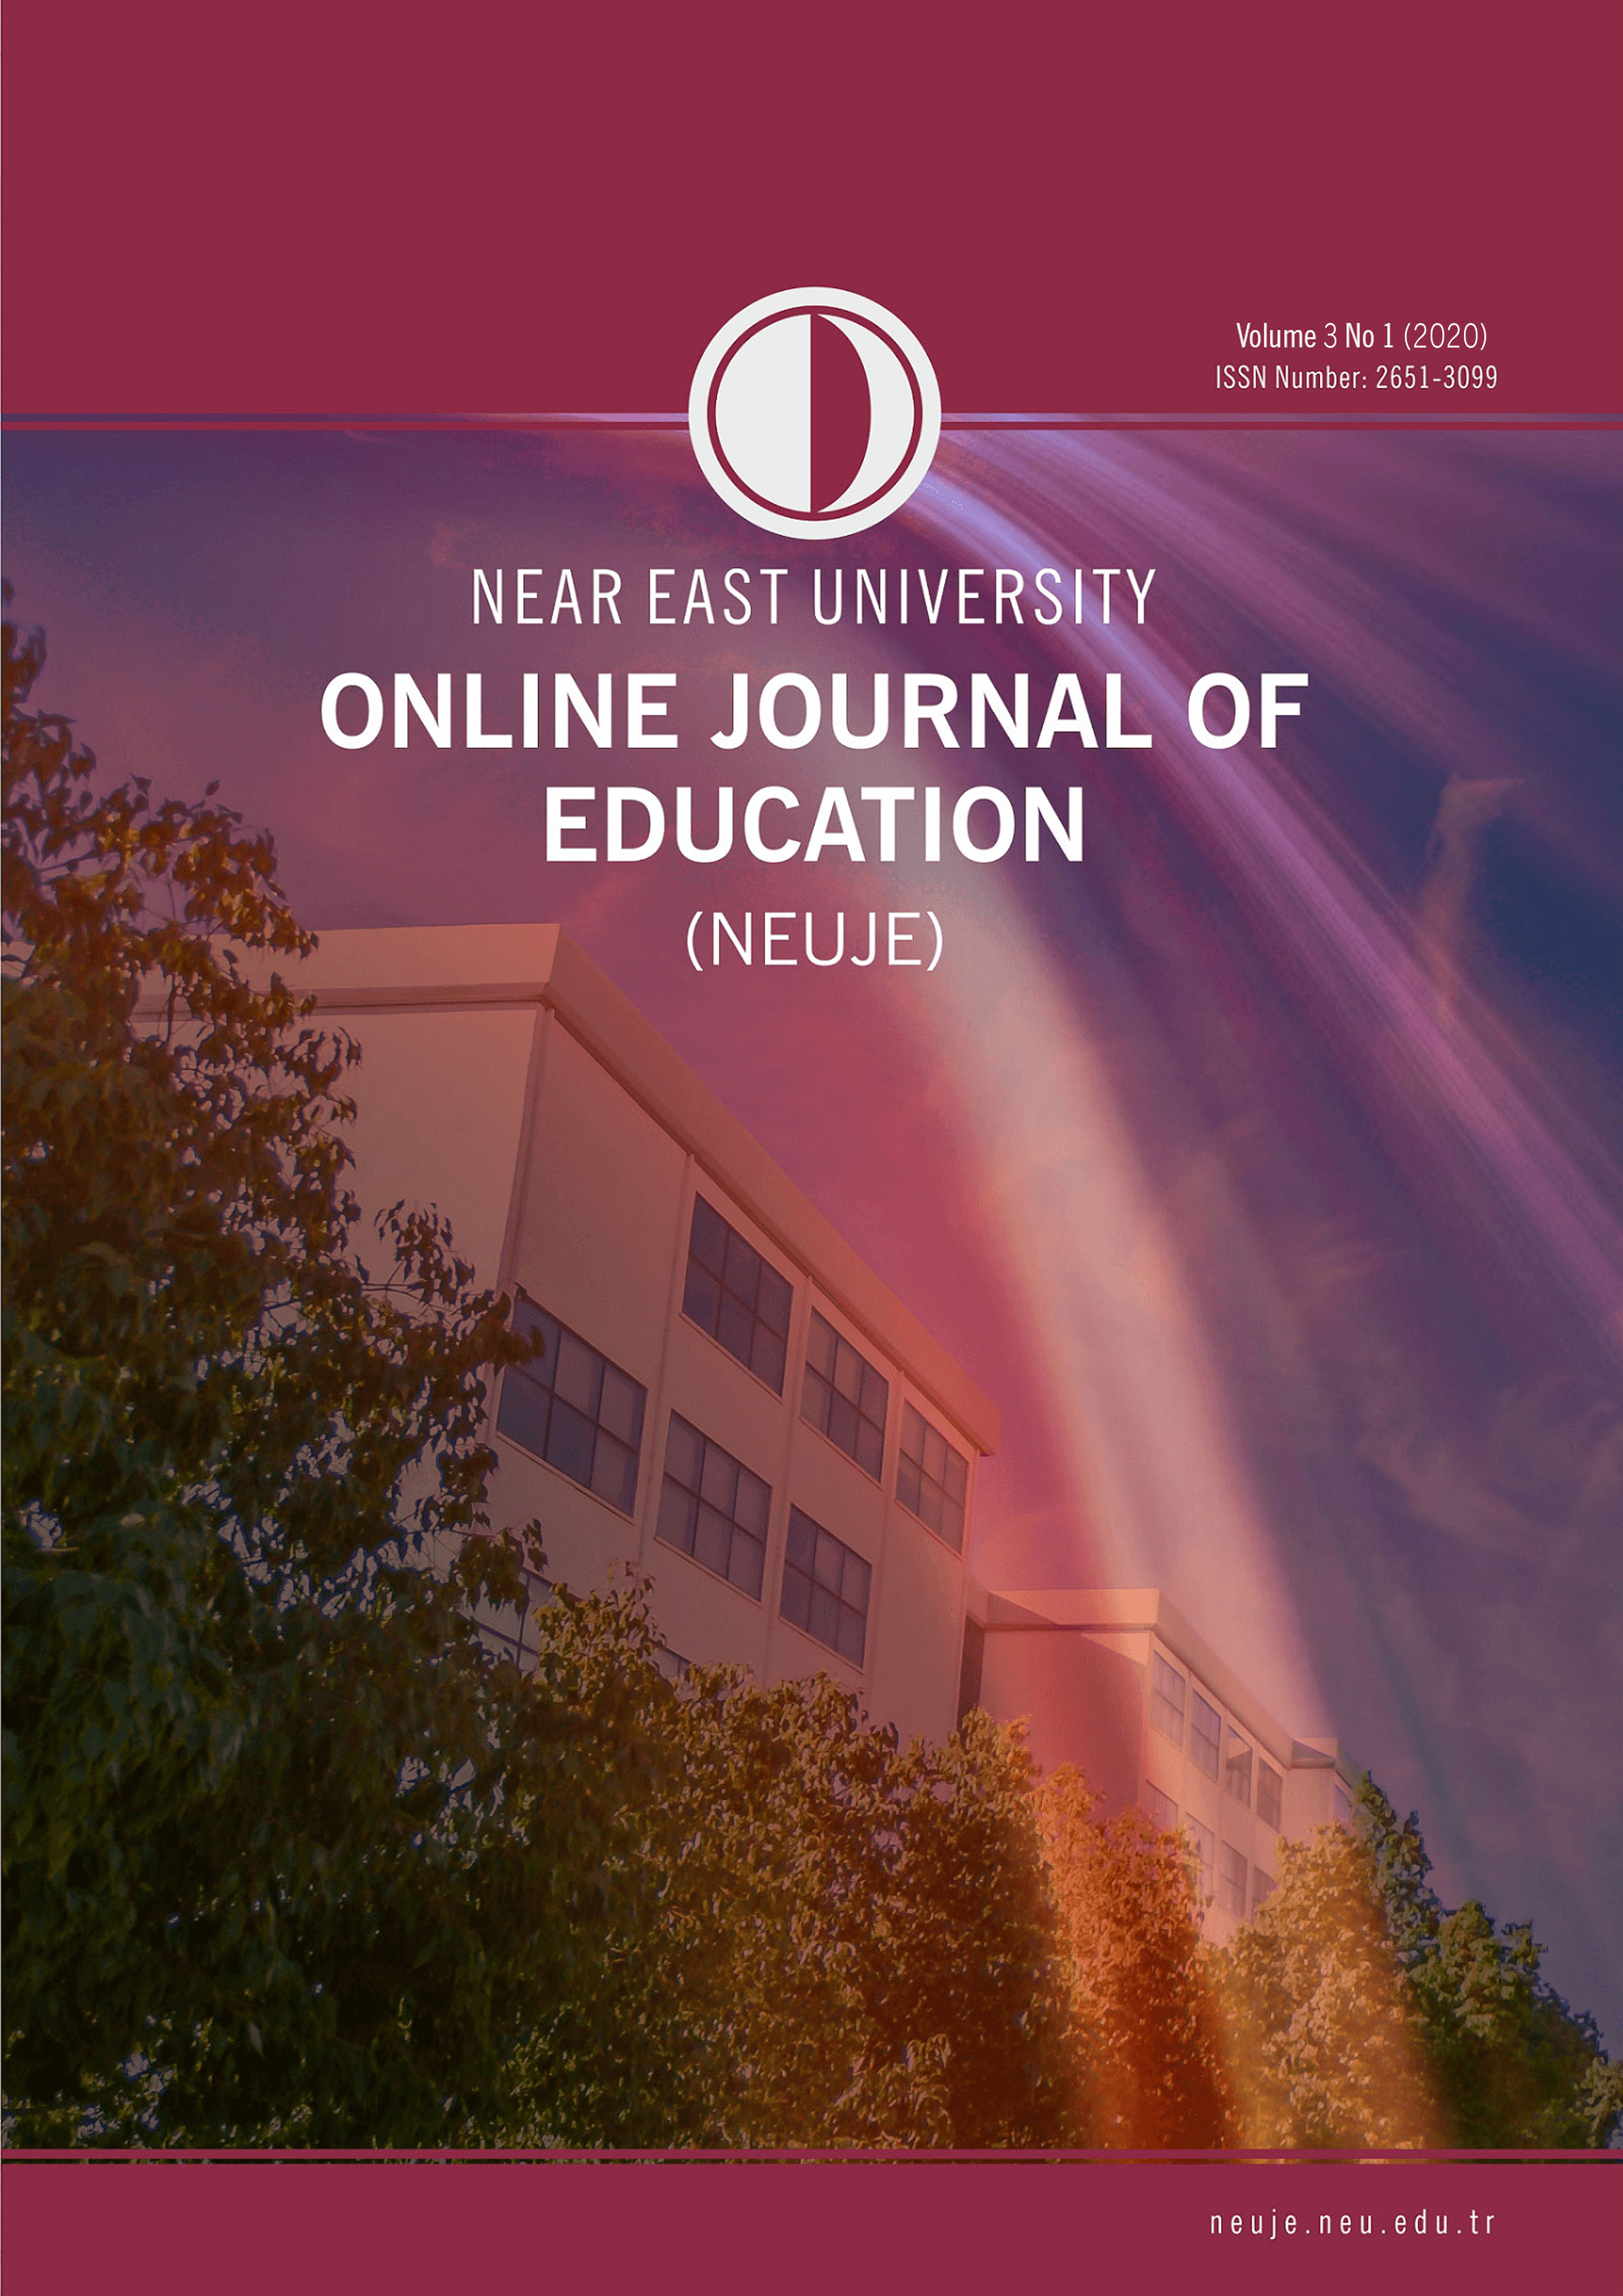 					View Vol. 3 No. 1 (2020): Near East University Online Journal of Education - NEUJE
				